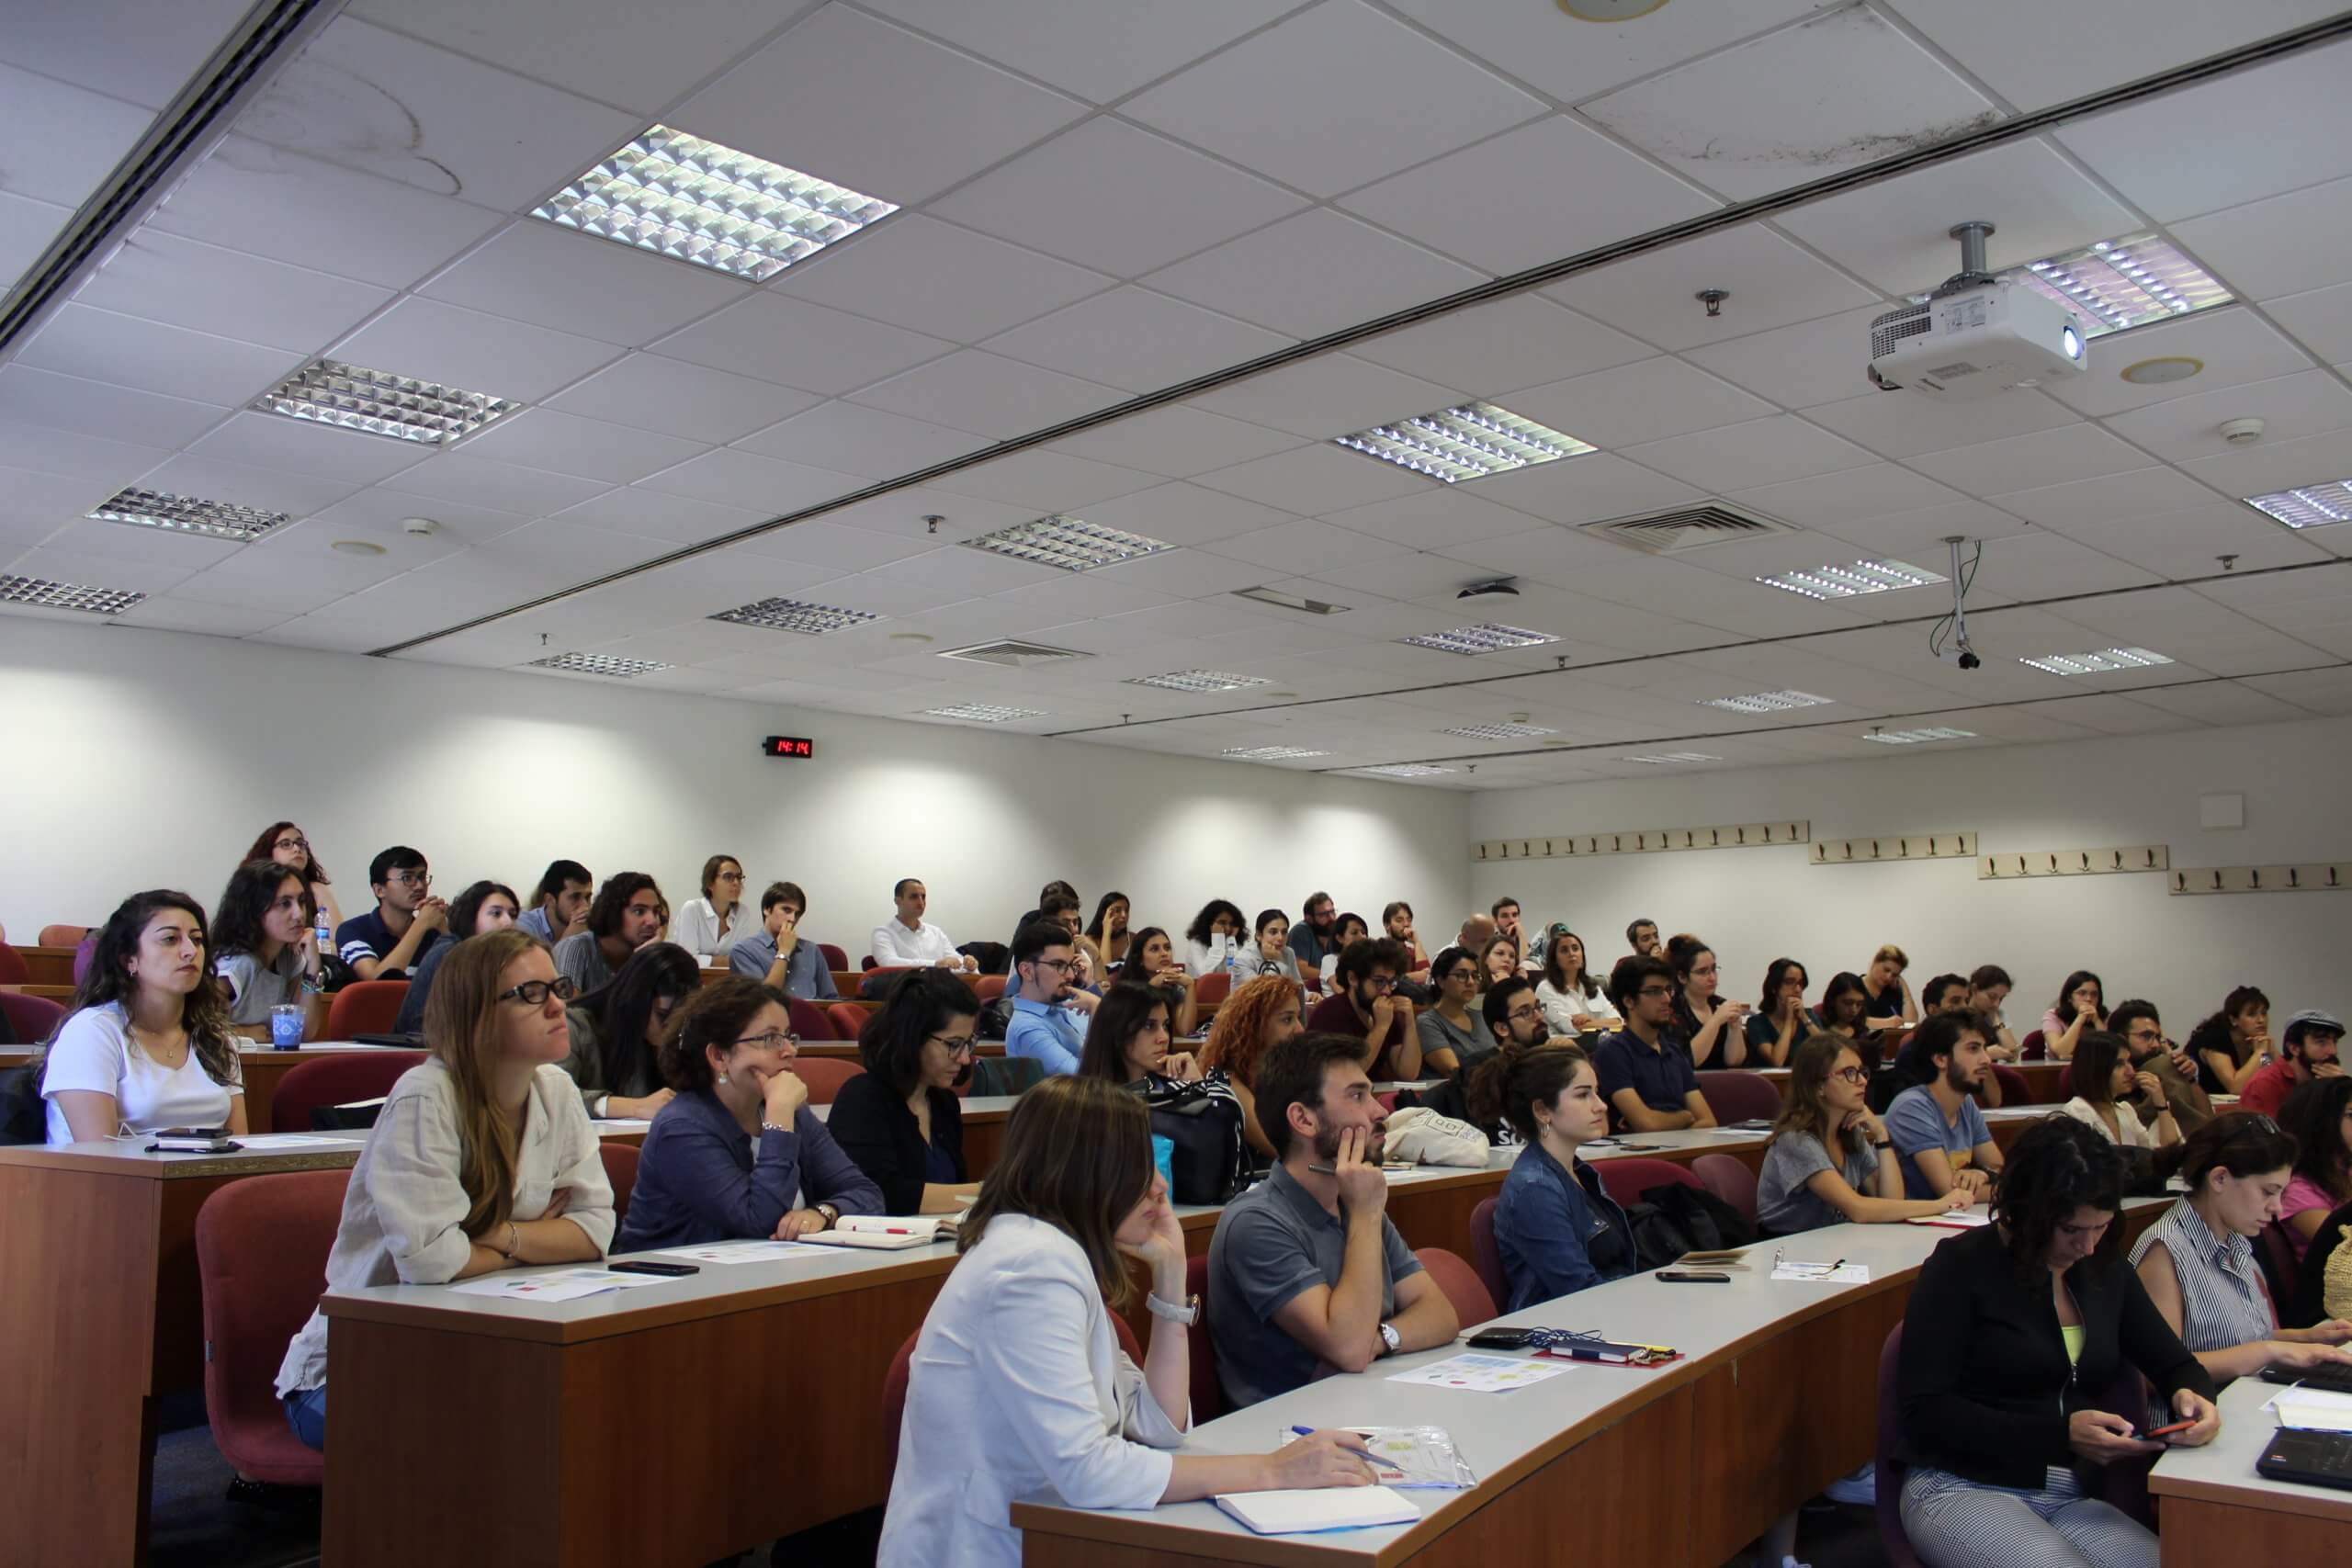 Koç University classroom with students